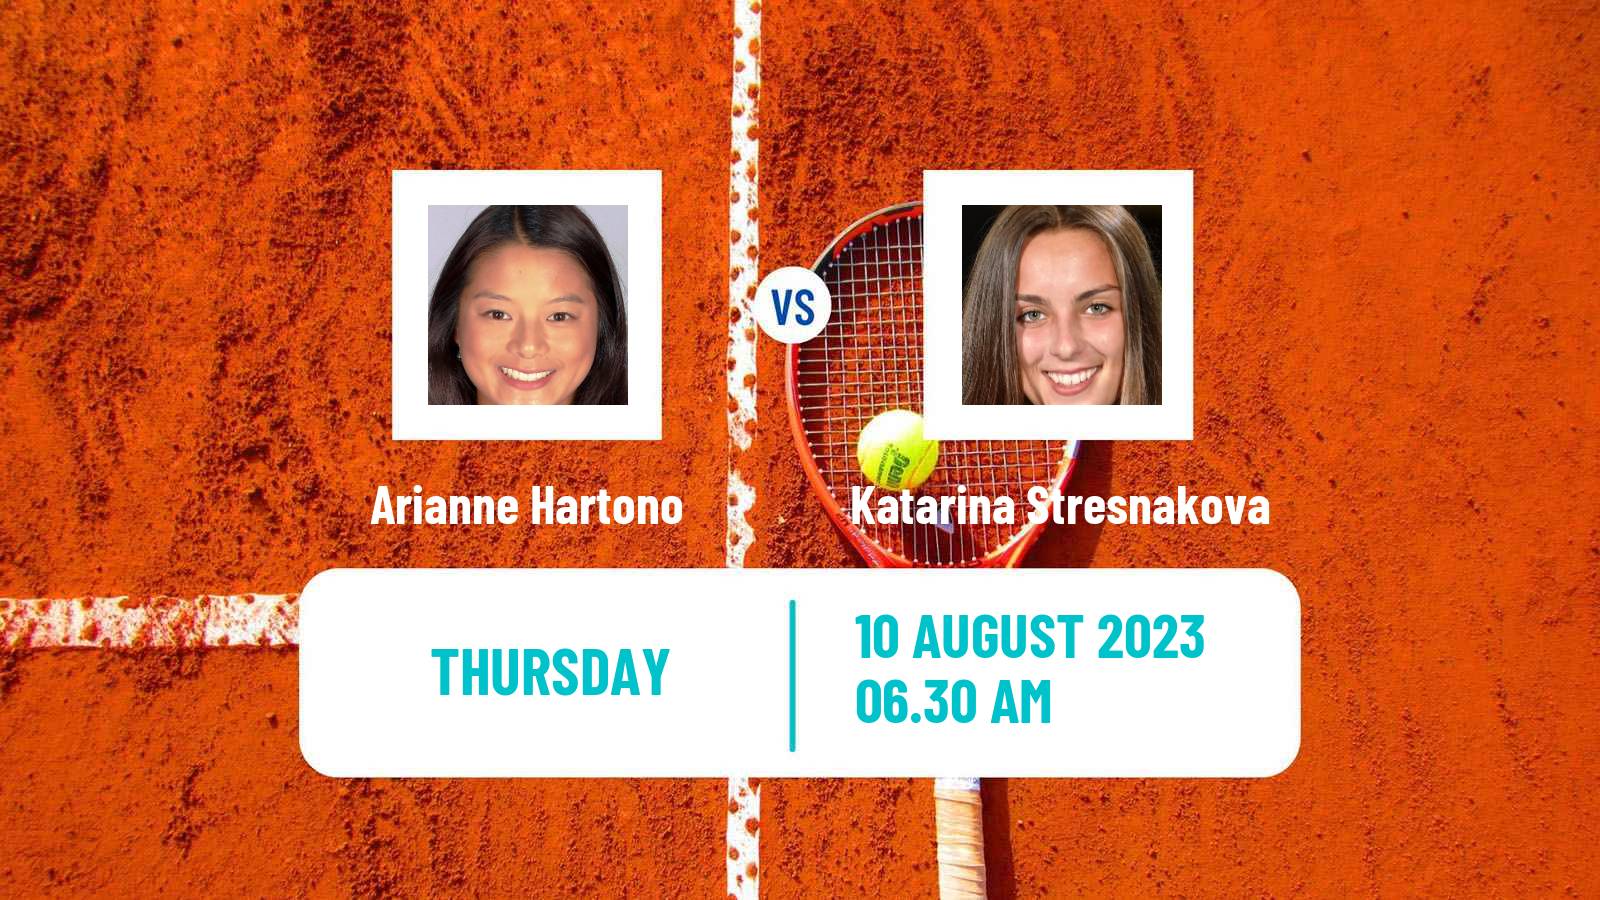 Tennis ITF W25 Roehampton 3 Women Arianne Hartono - Katarina Stresnakova